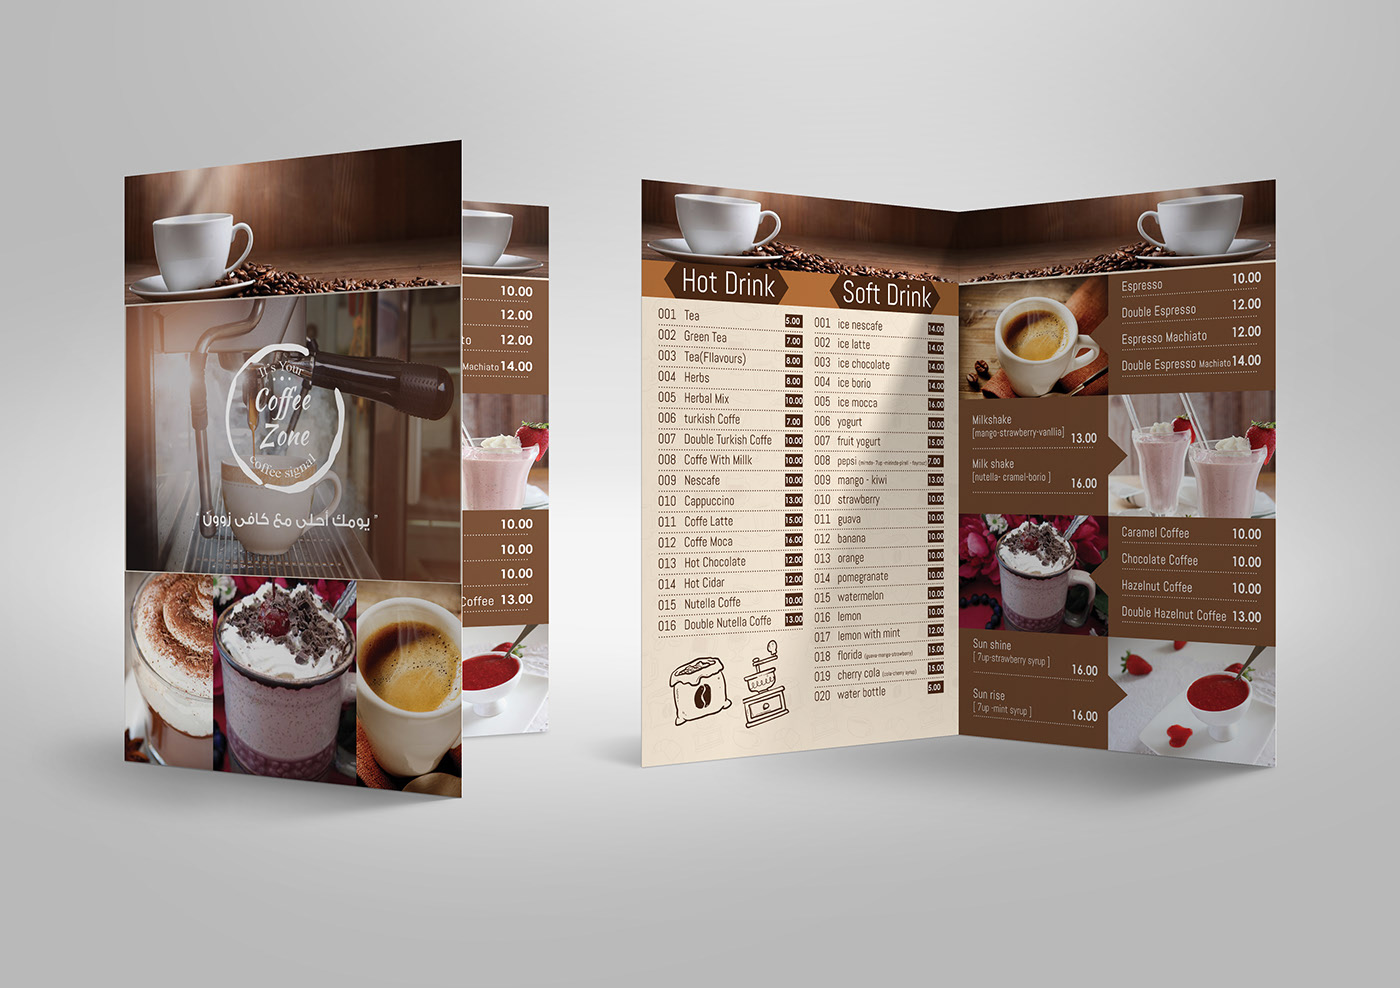 Coffee zone menu. 